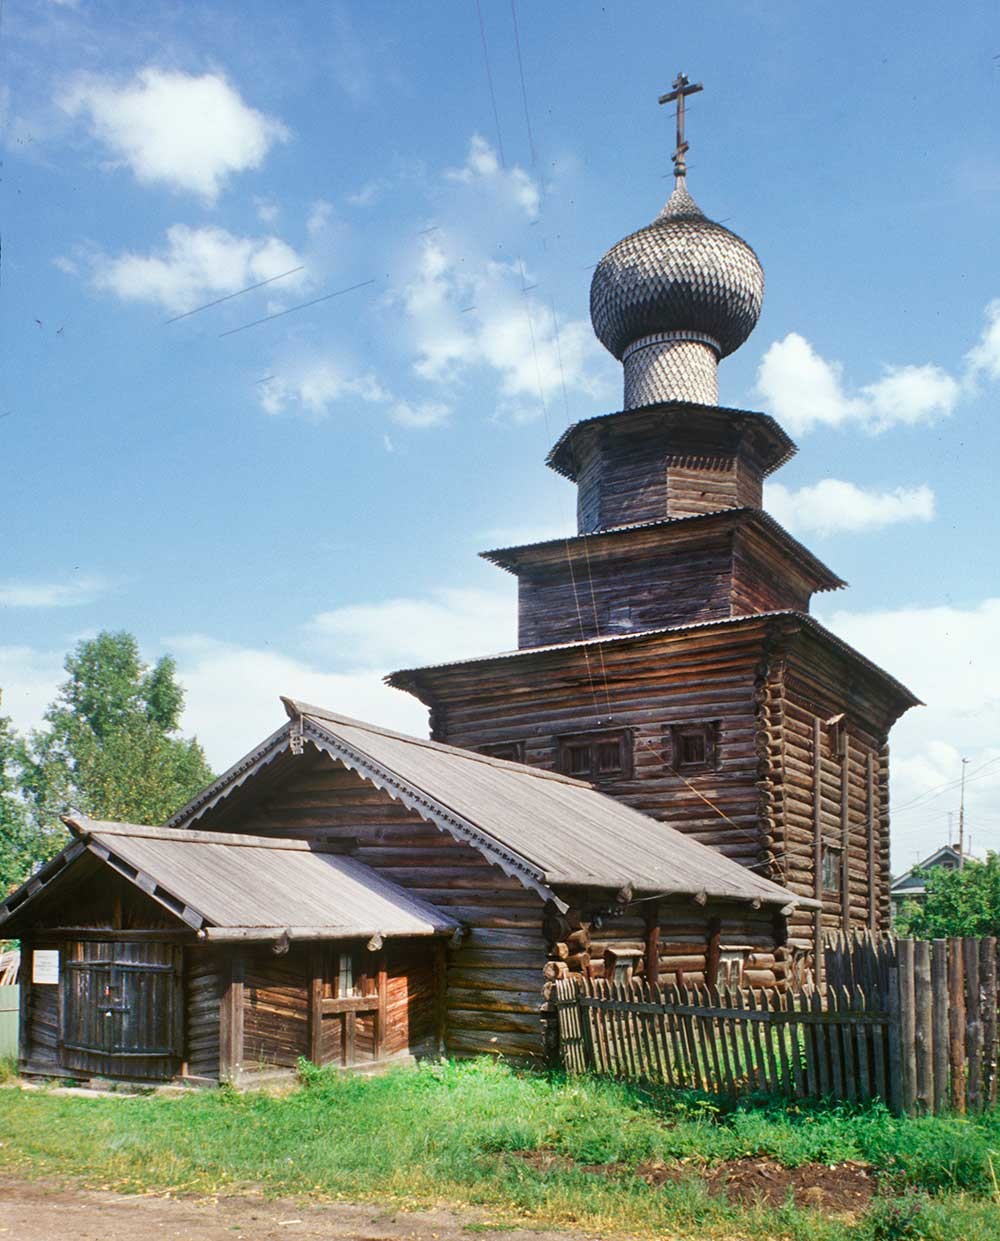 Chiesa del profeta Elia, vista sud-ovest. 23 luglio 1999
